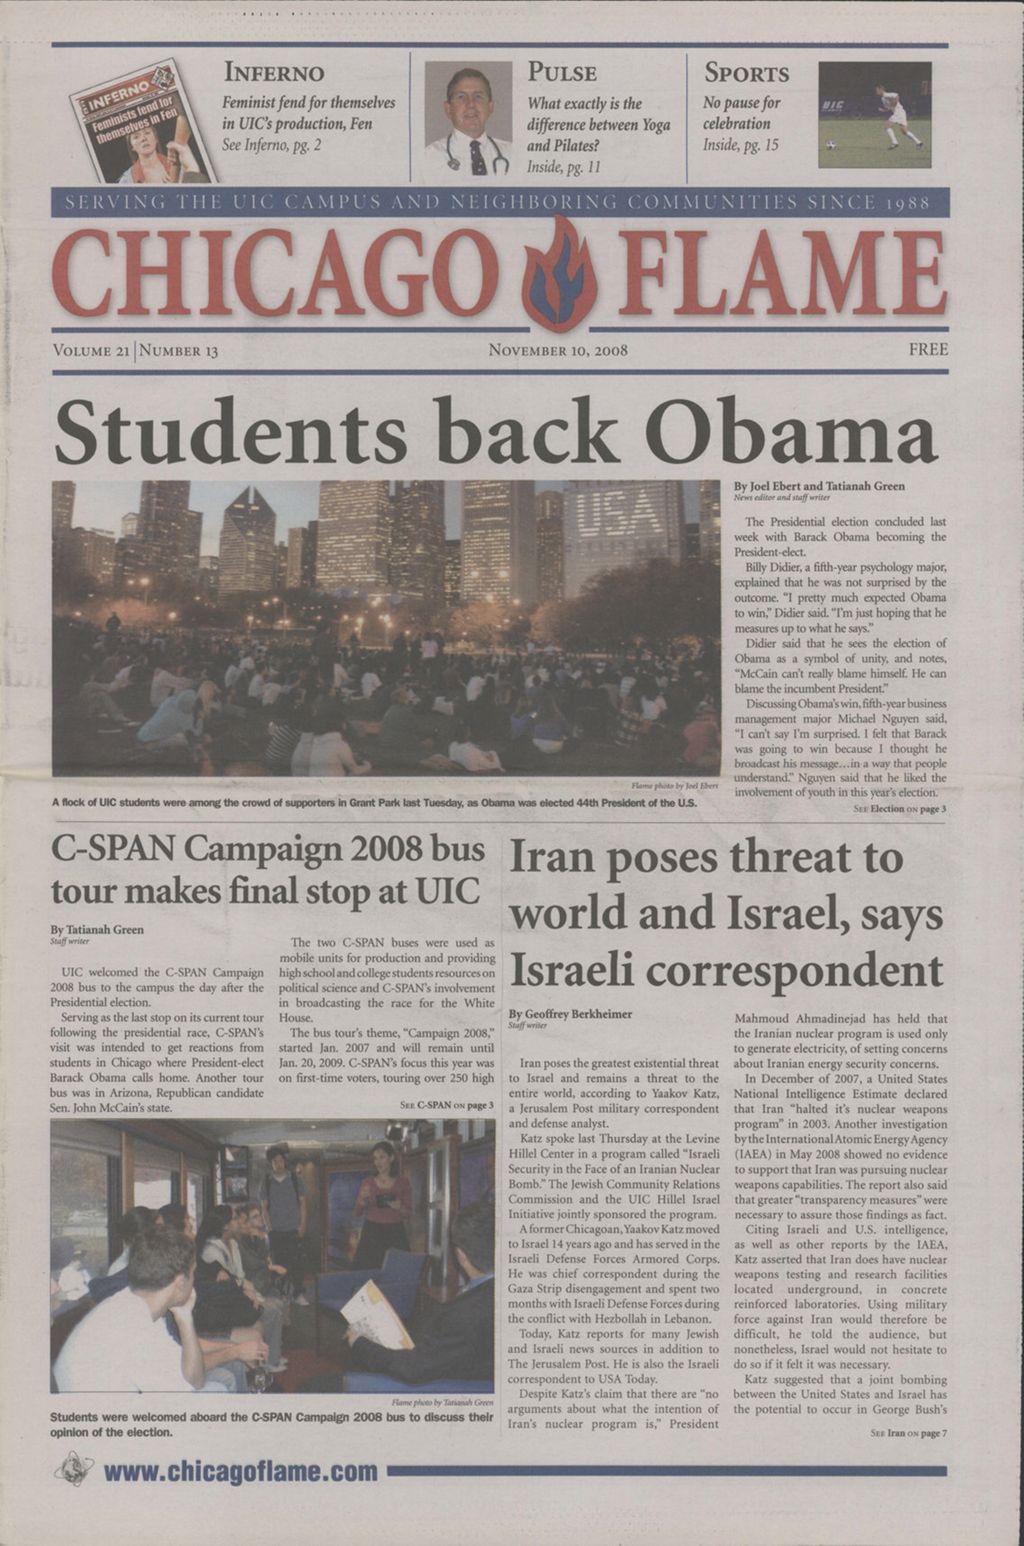 Chicago Flame (November 10, 2008)